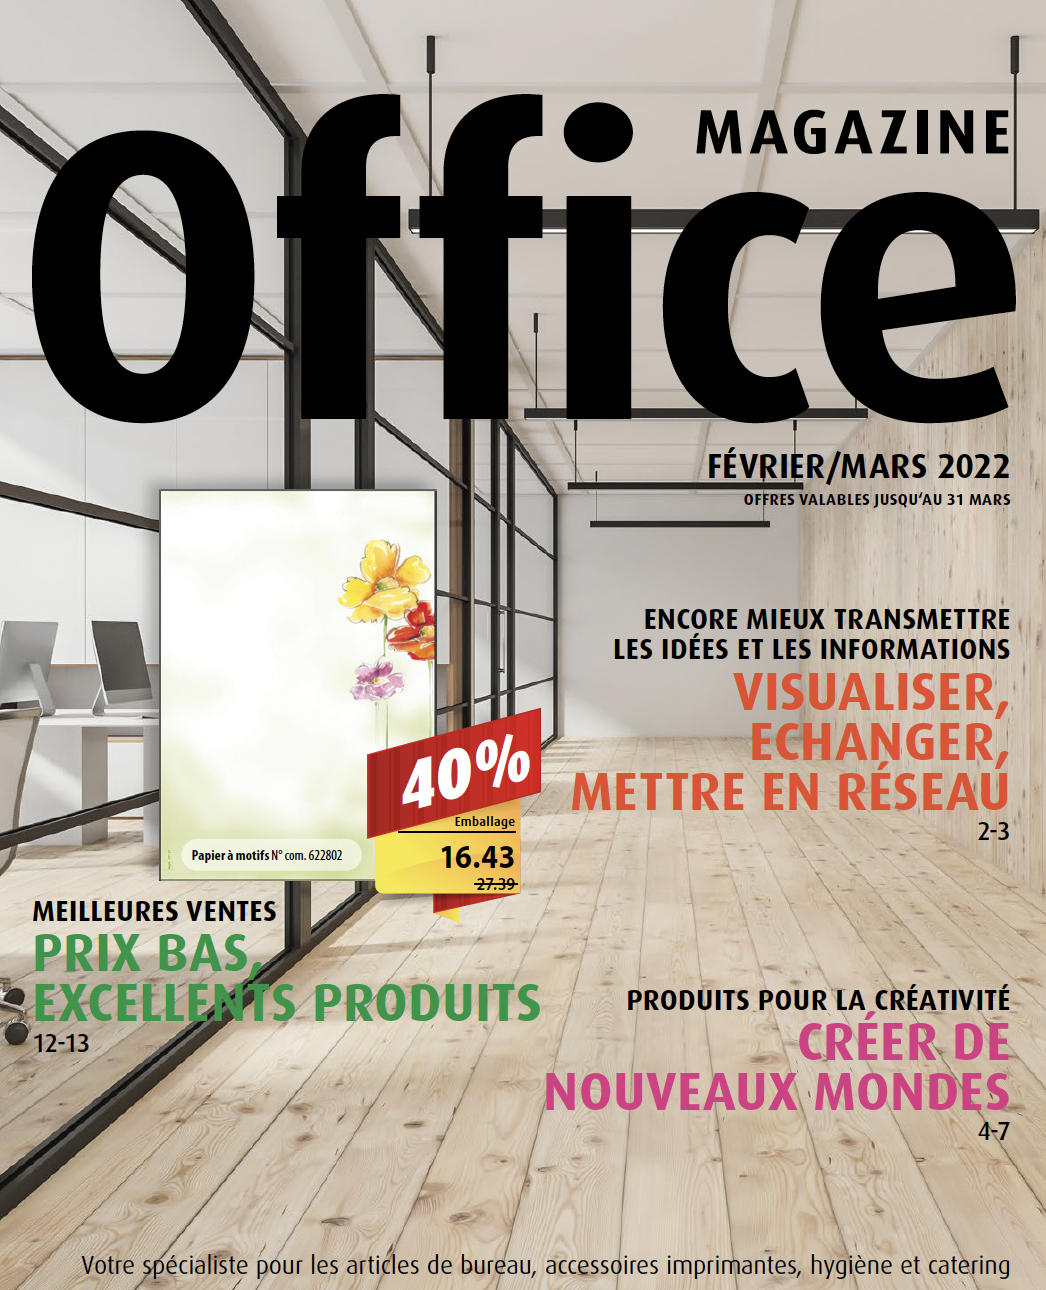 Magazine Office février/mars 2022